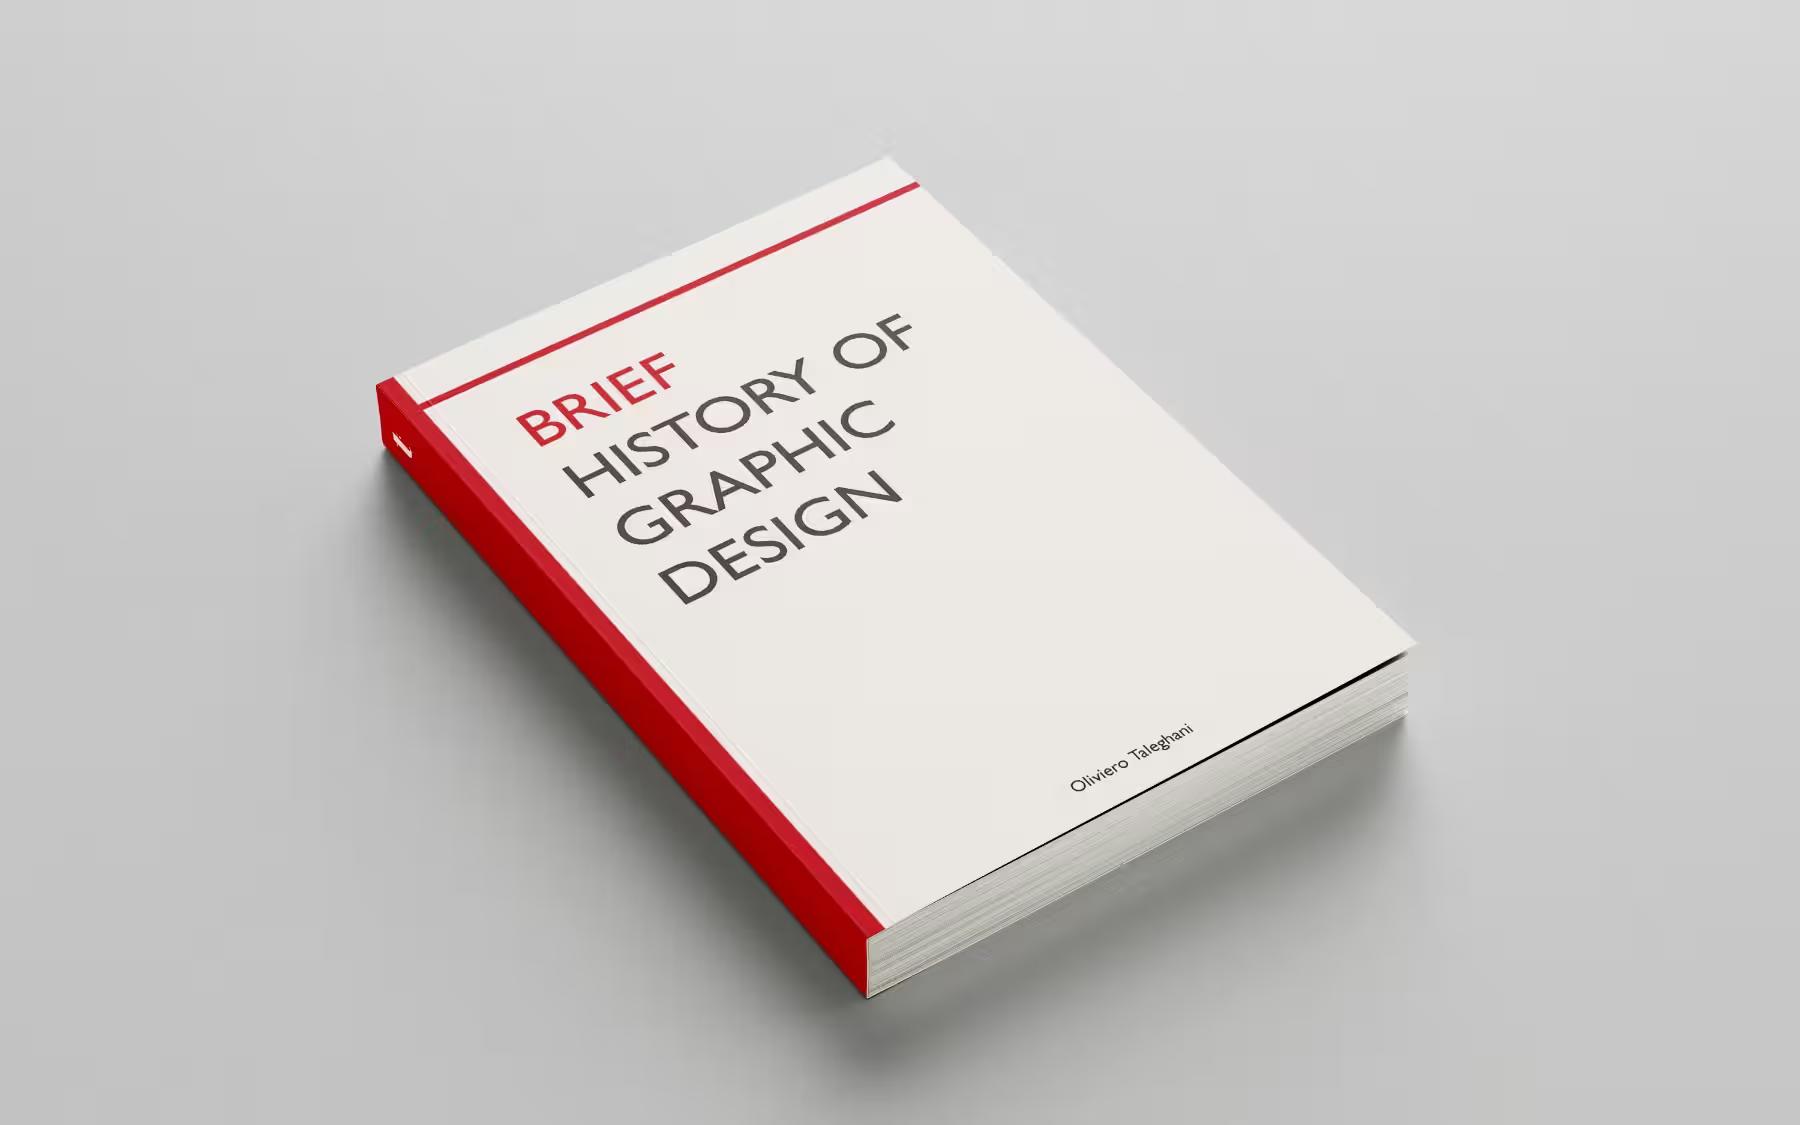 Brief History of Graphic Design
